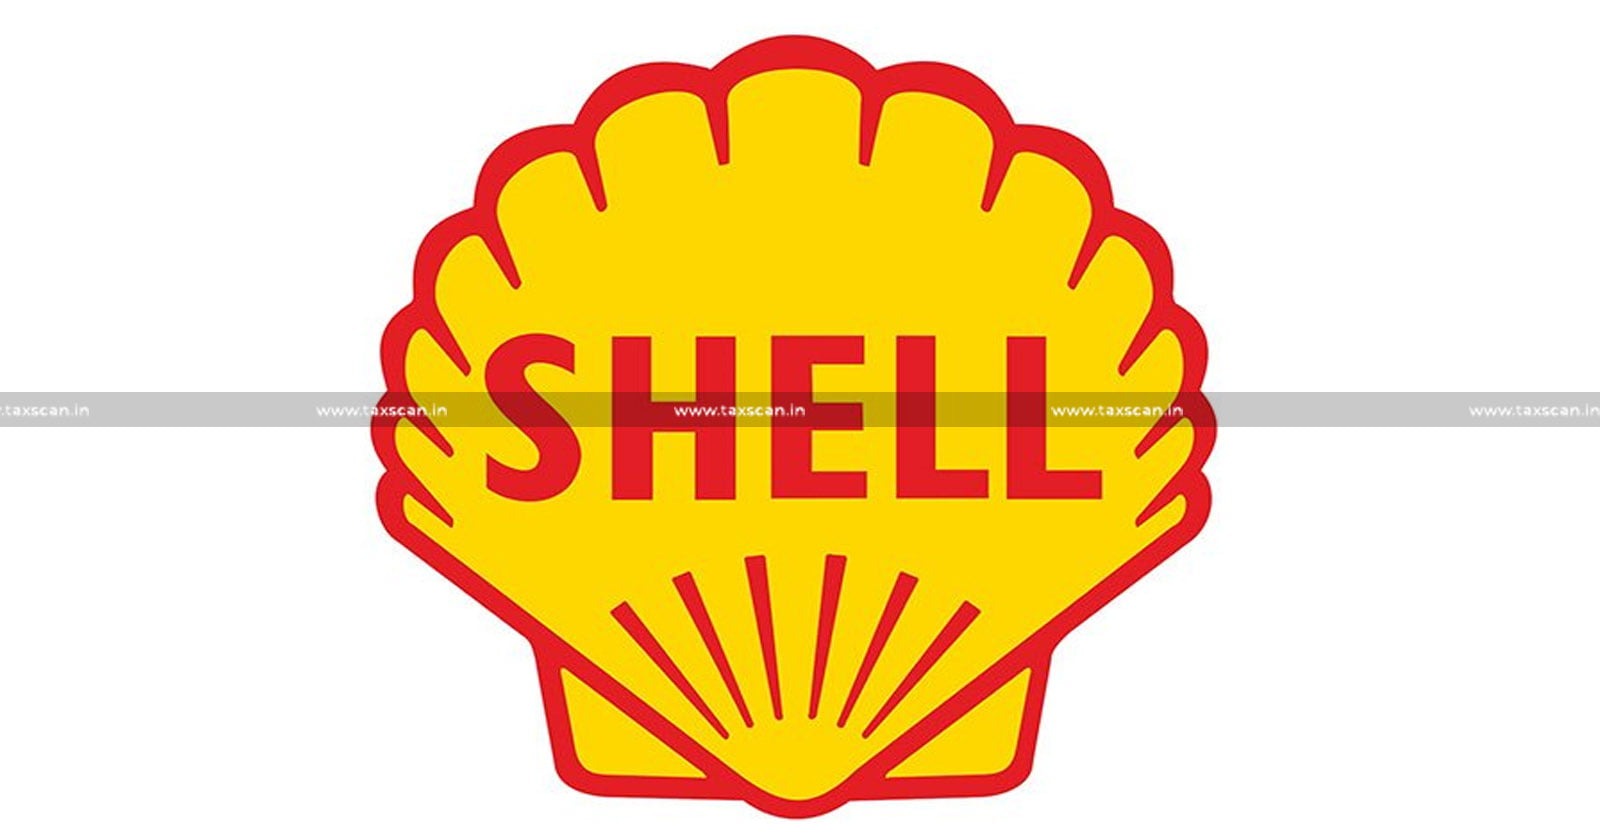 MBA Vacancy in Shell - CA vacancy in shell - CA vacancy - TAXSCAN